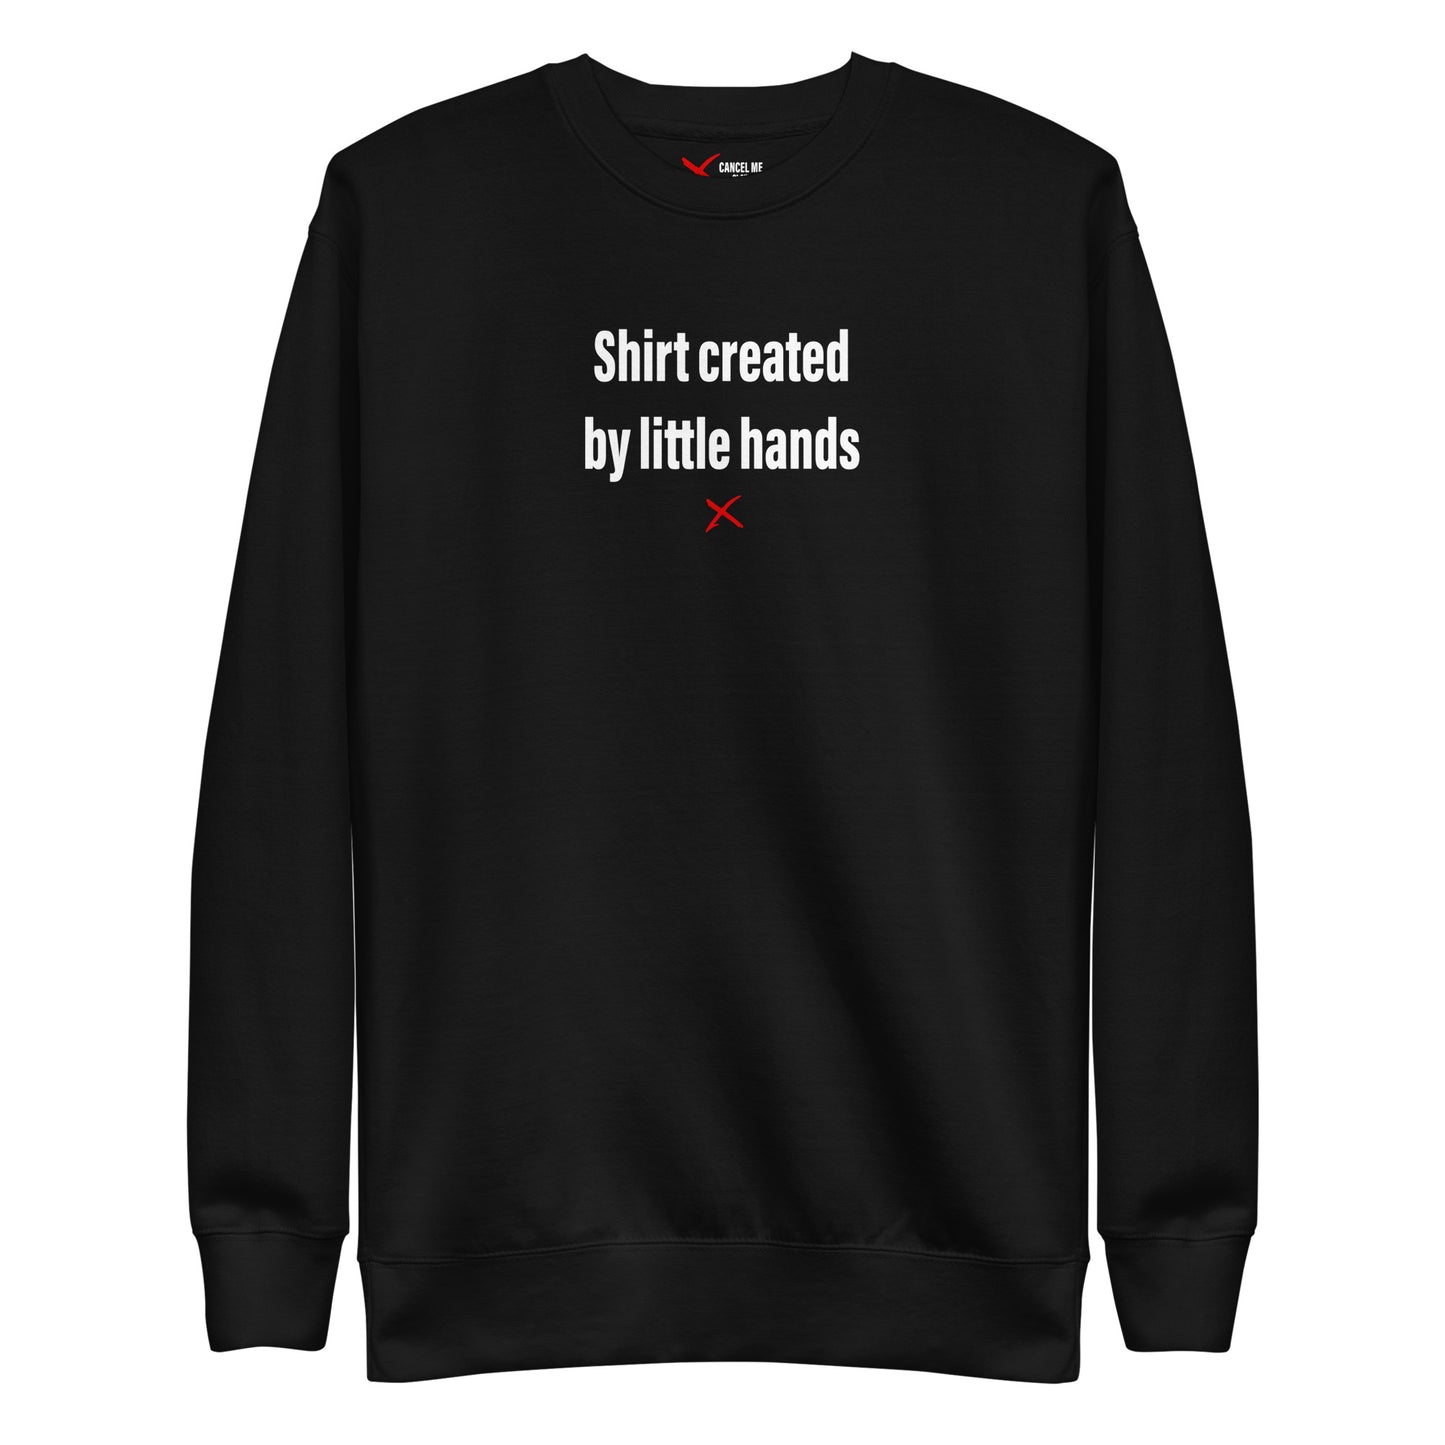 Shirt created by little hands - Sweatshirt